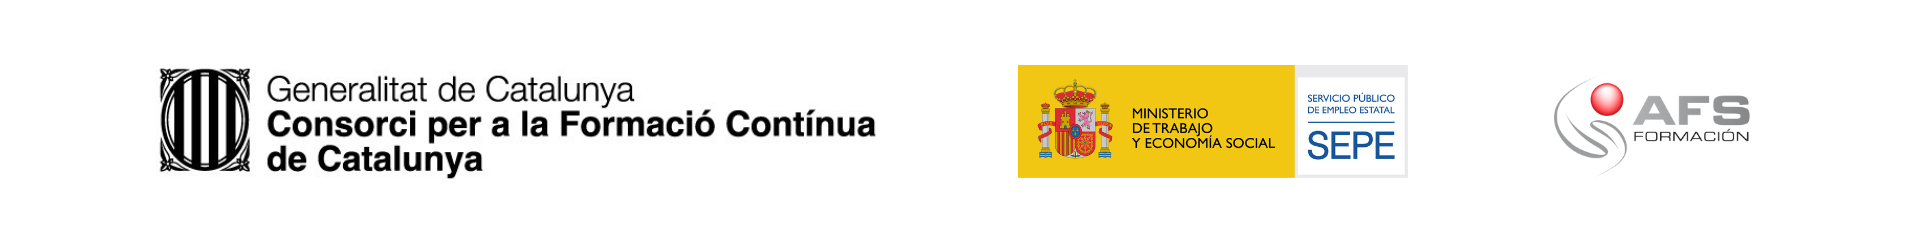 Logos Cataluña AFS